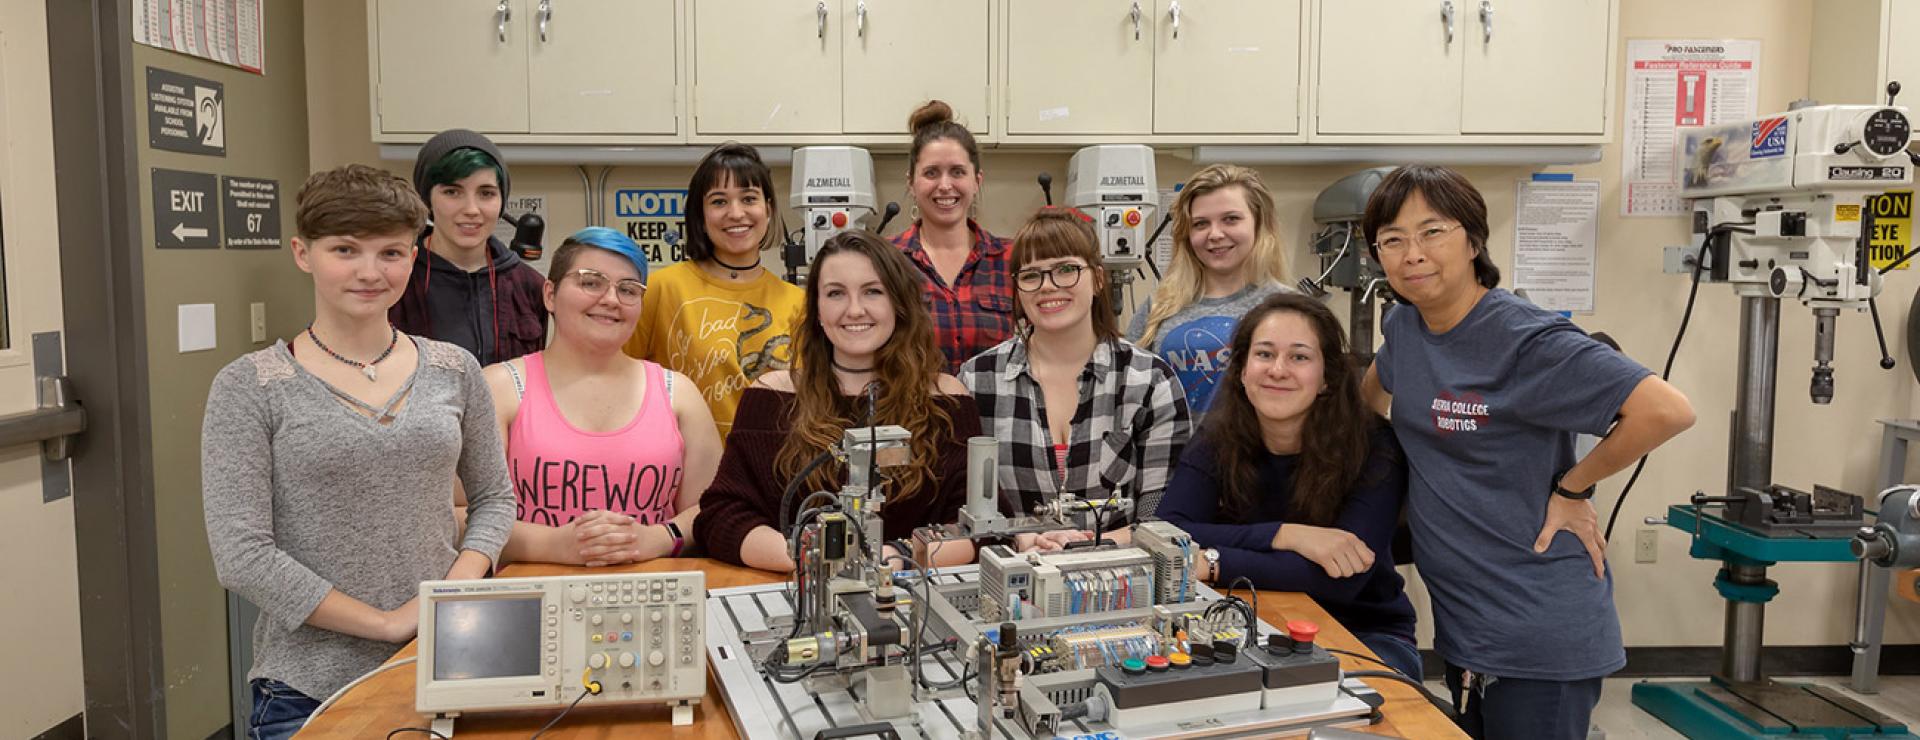 Mechatronics instructor and female students learning robotics